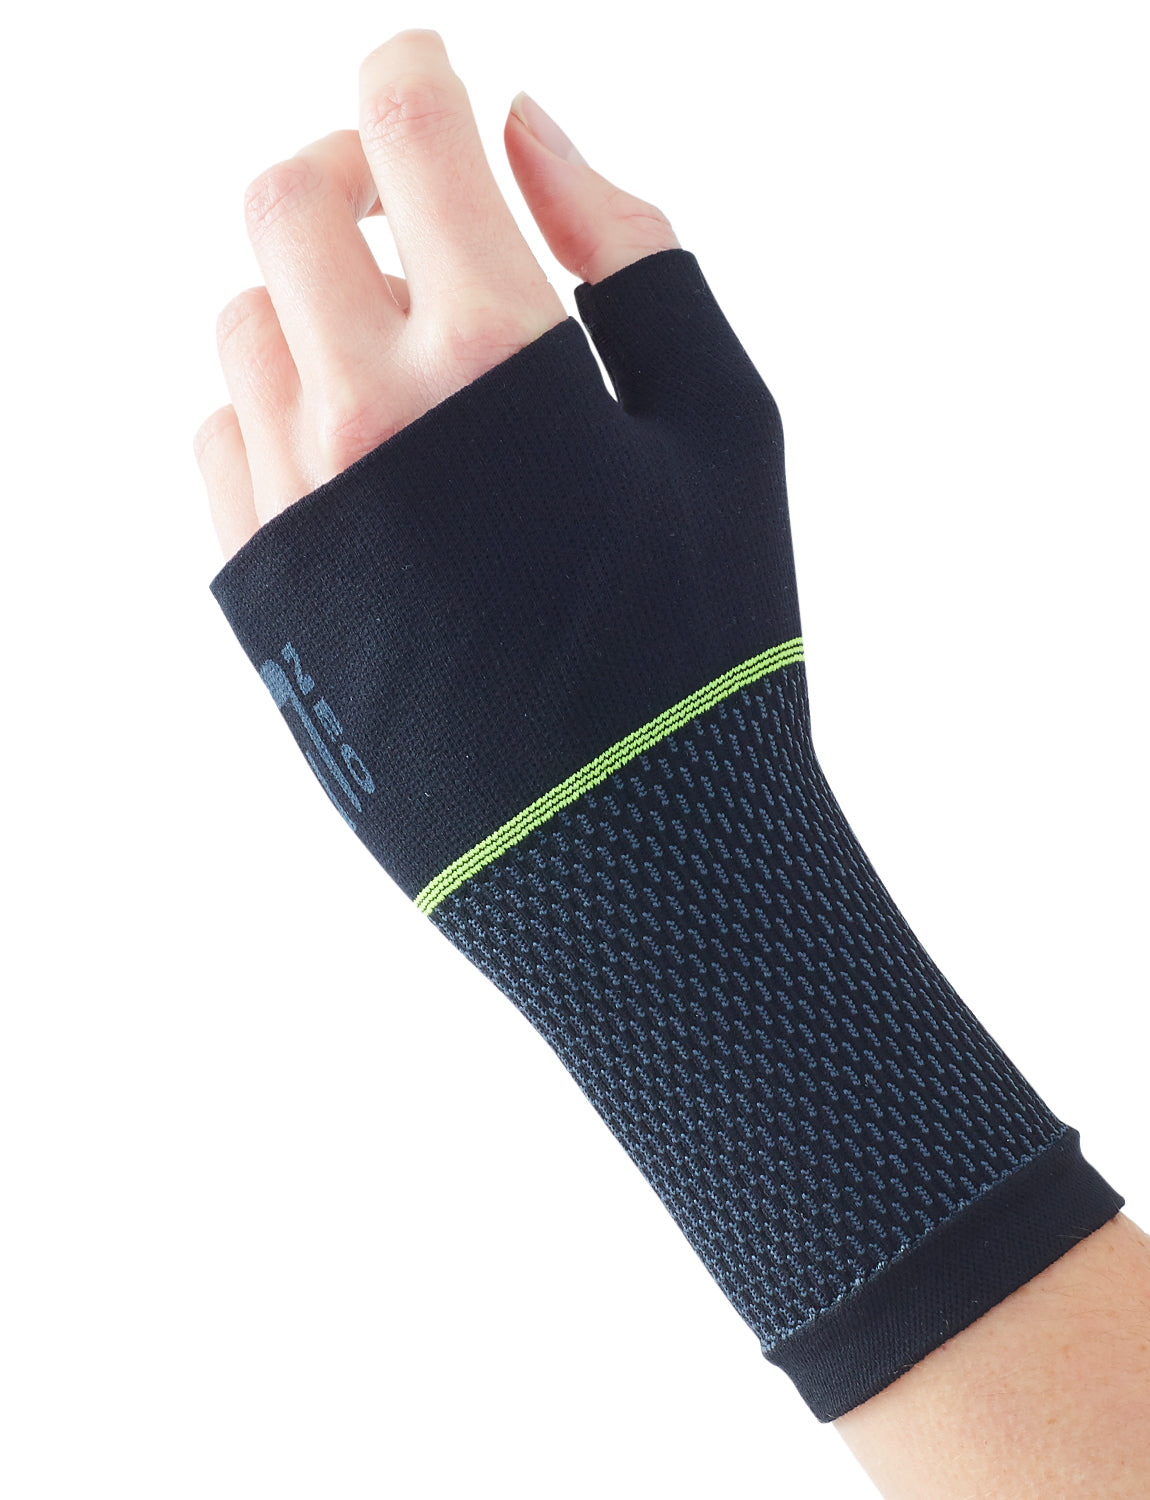 Zensah Compression Wrist Support - Wrist Sleeve for Wrist Pain, Carpal  Tunnel - Wrist Support - Wrist Brace (Small, Black/Grey)